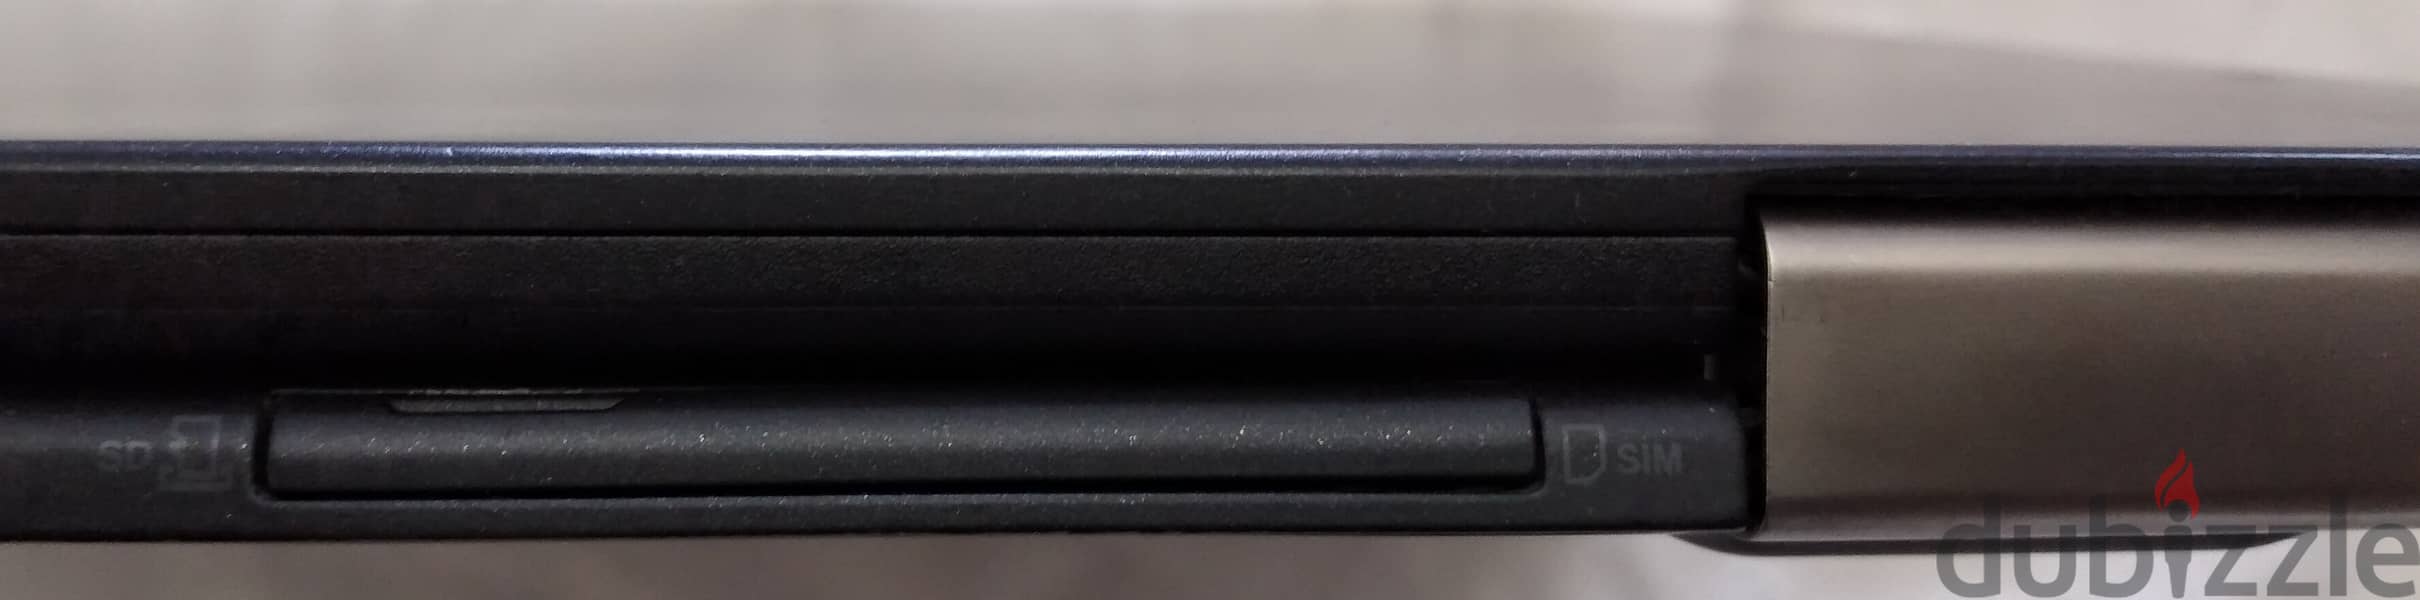 Lenovo ThinkPad X1 Carbon i5(6th) 6200U  - Ultrabook 11